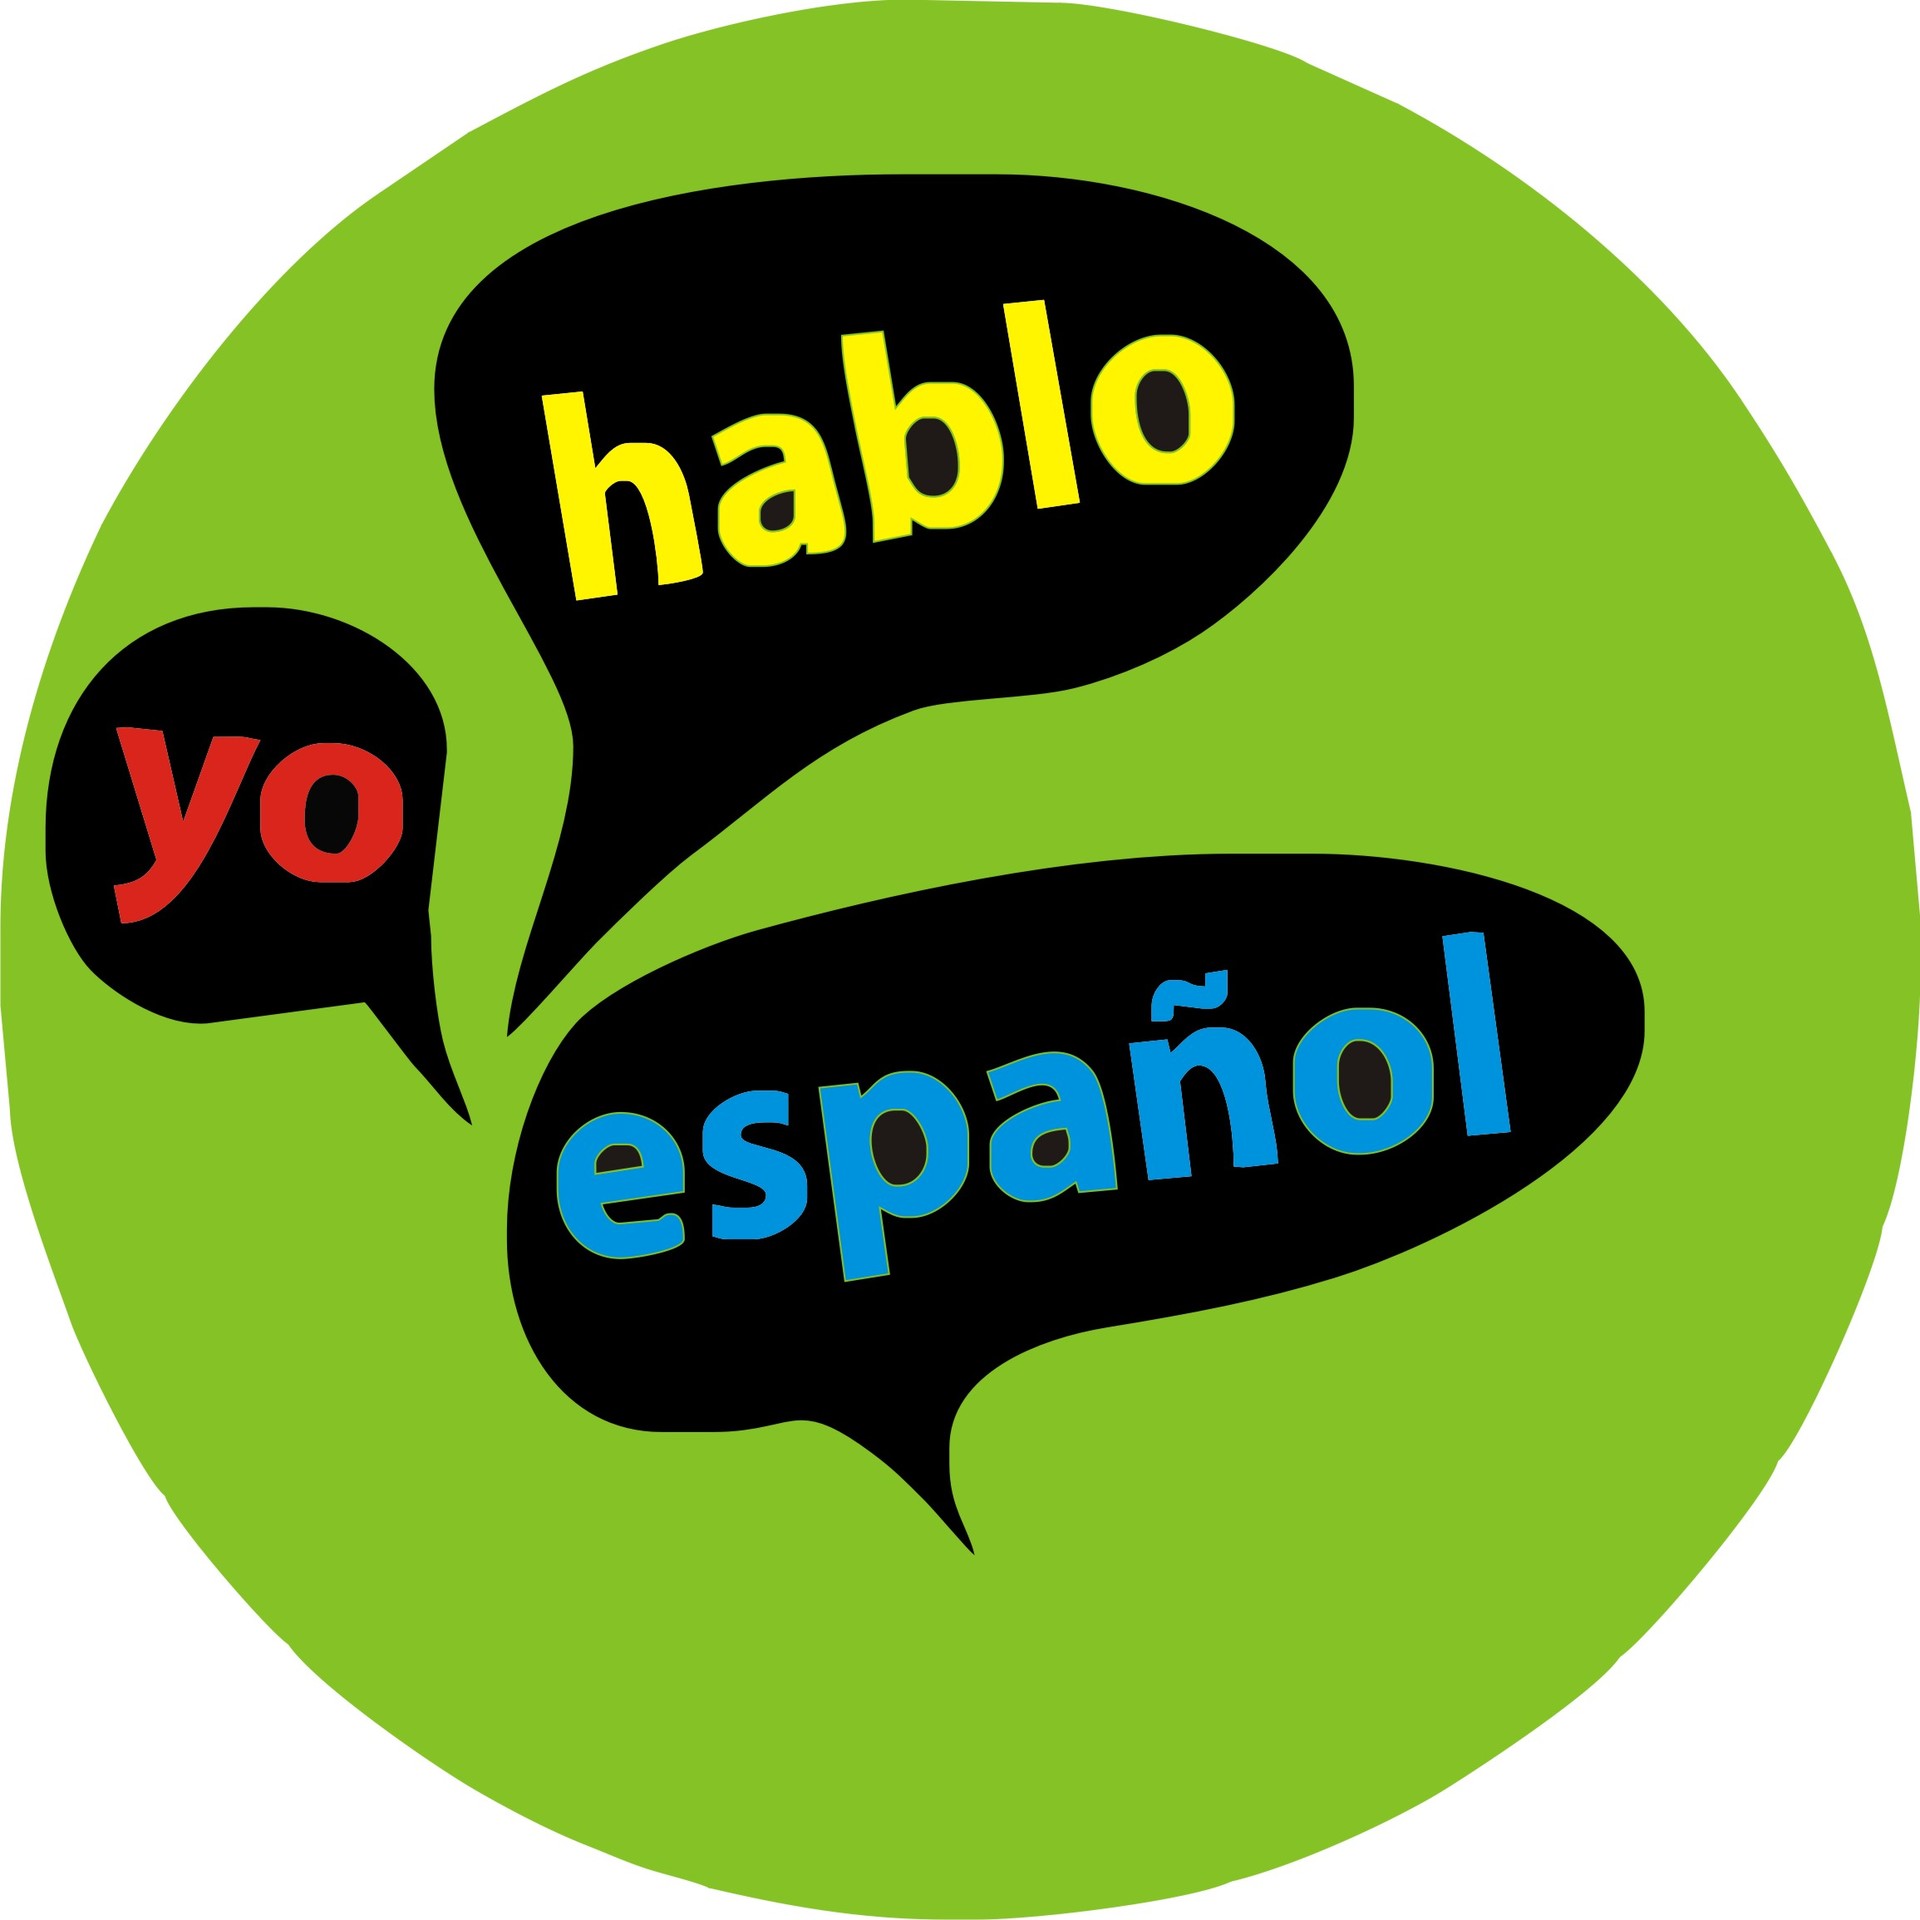 my experience learning spanish language 55d91655c9643ba13c04c89dab25b3c4